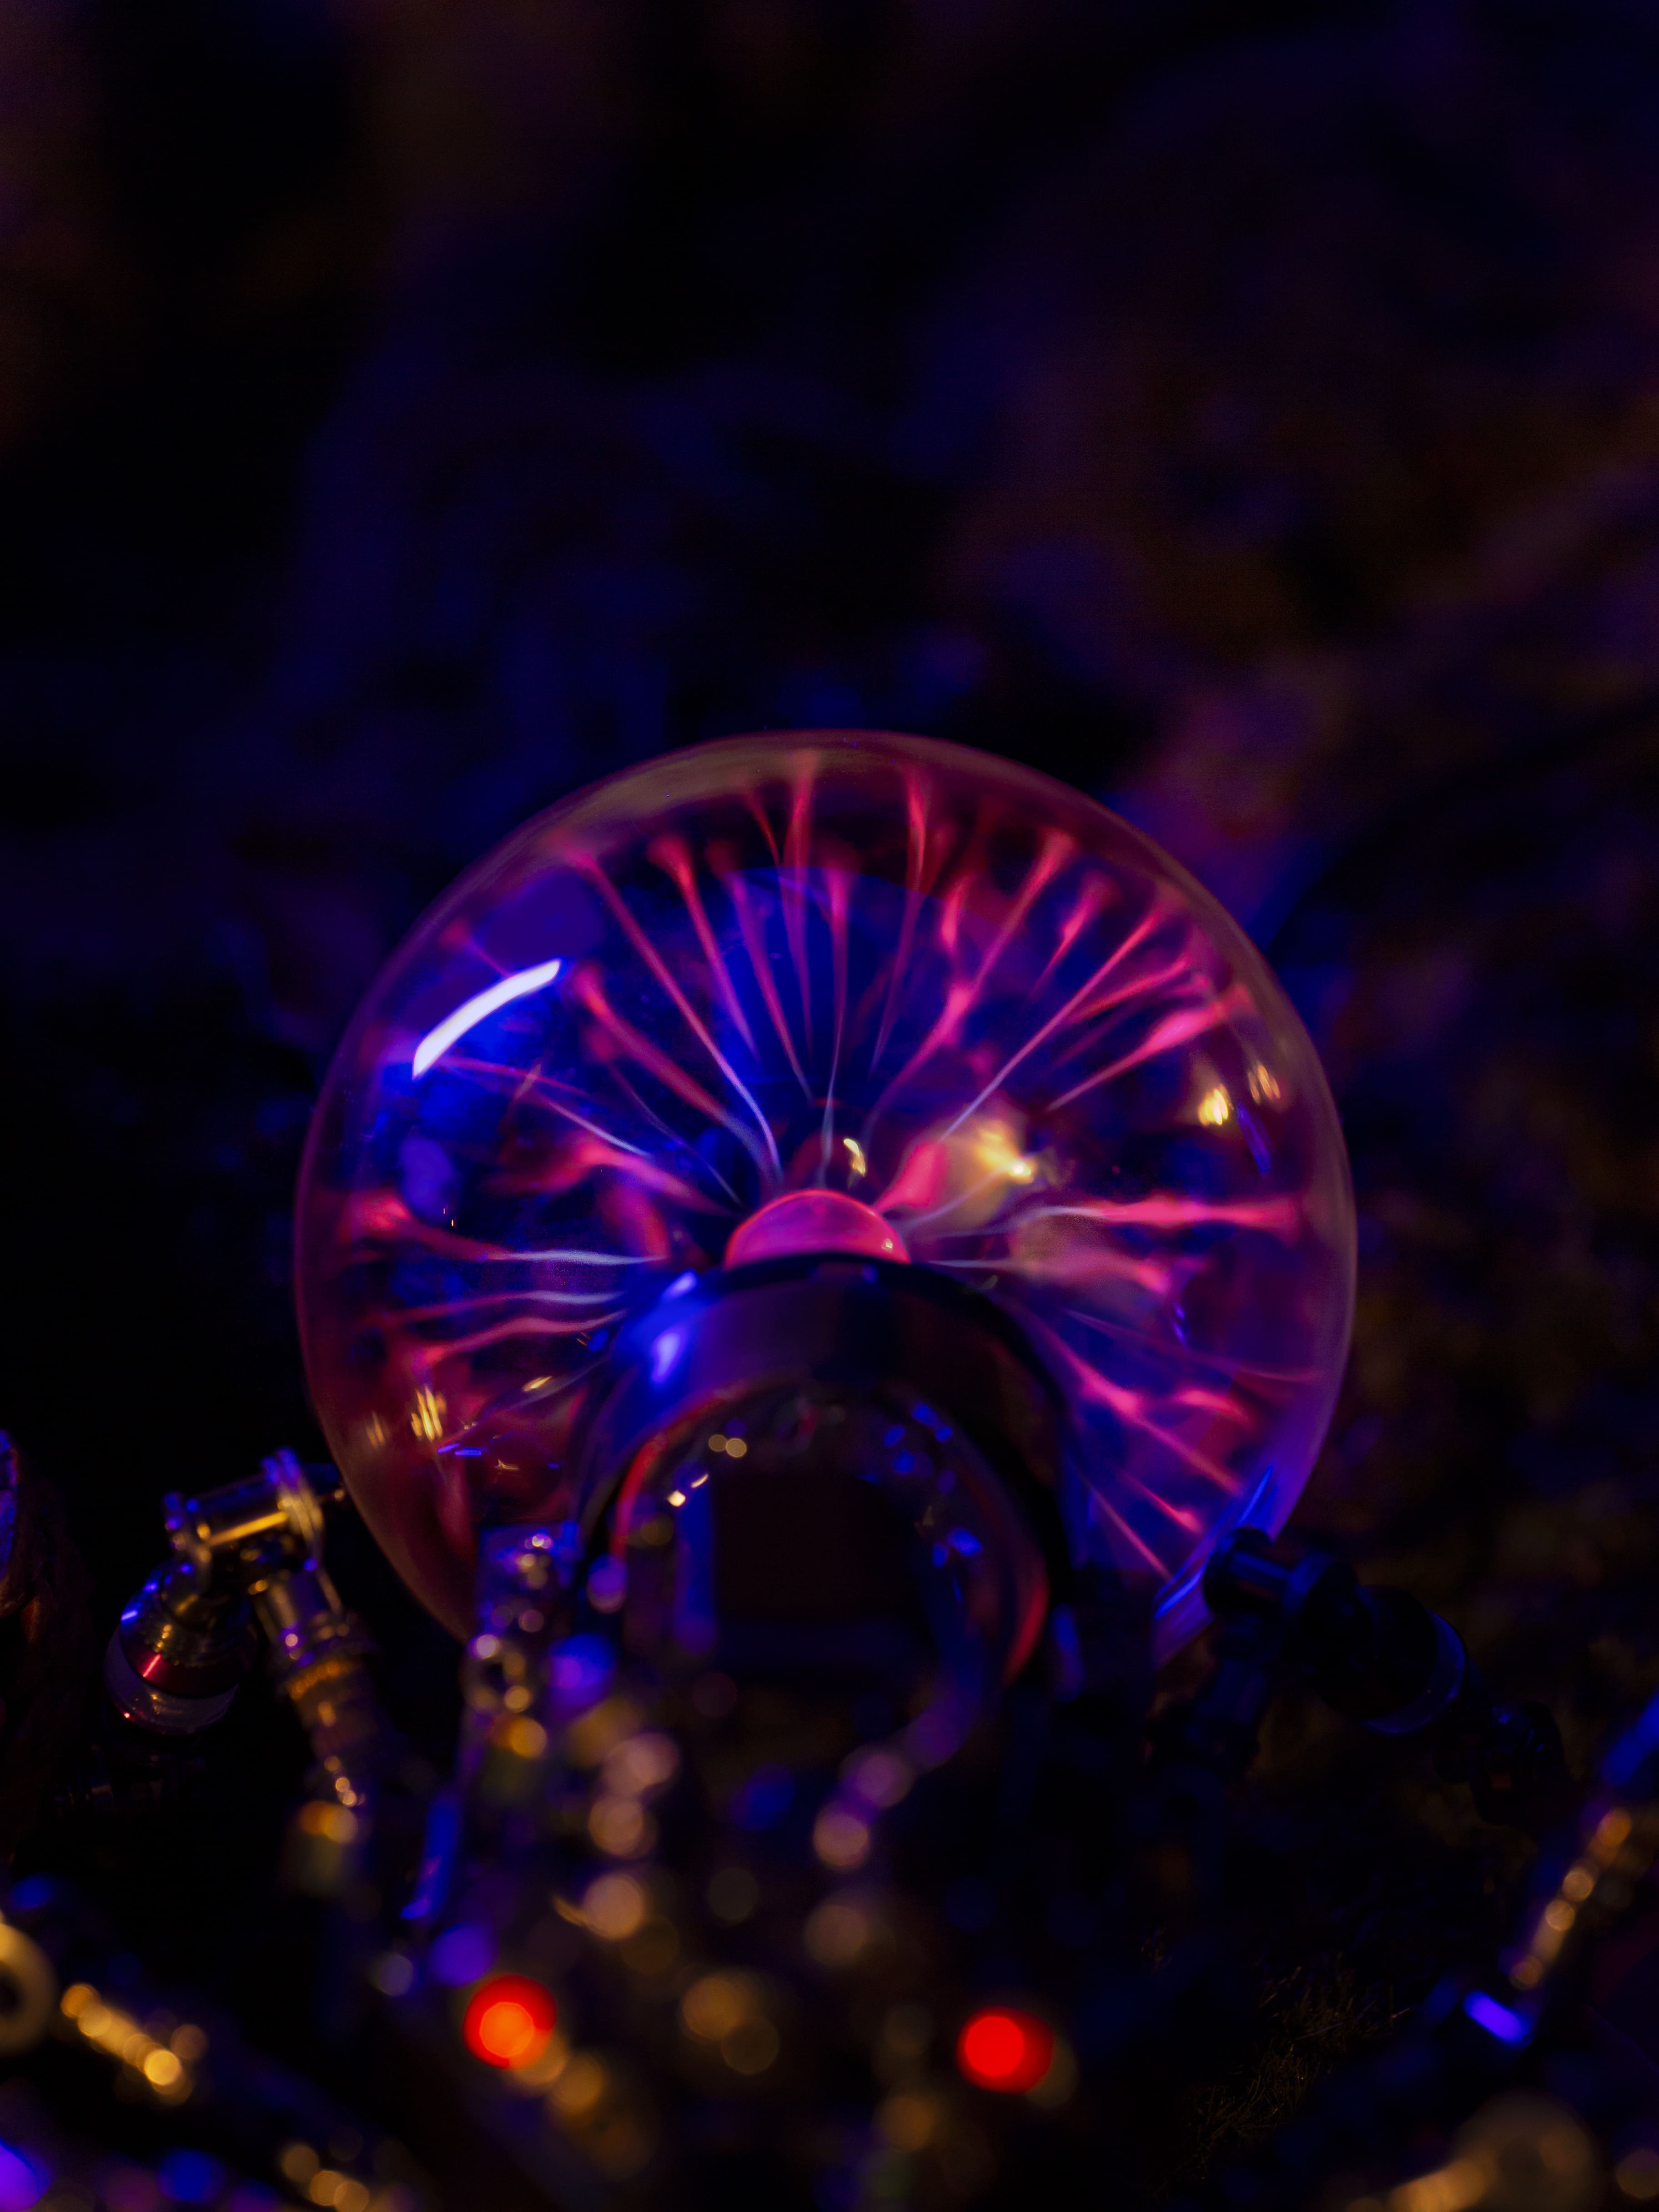 Cyberpunk Plasma Ball Spider